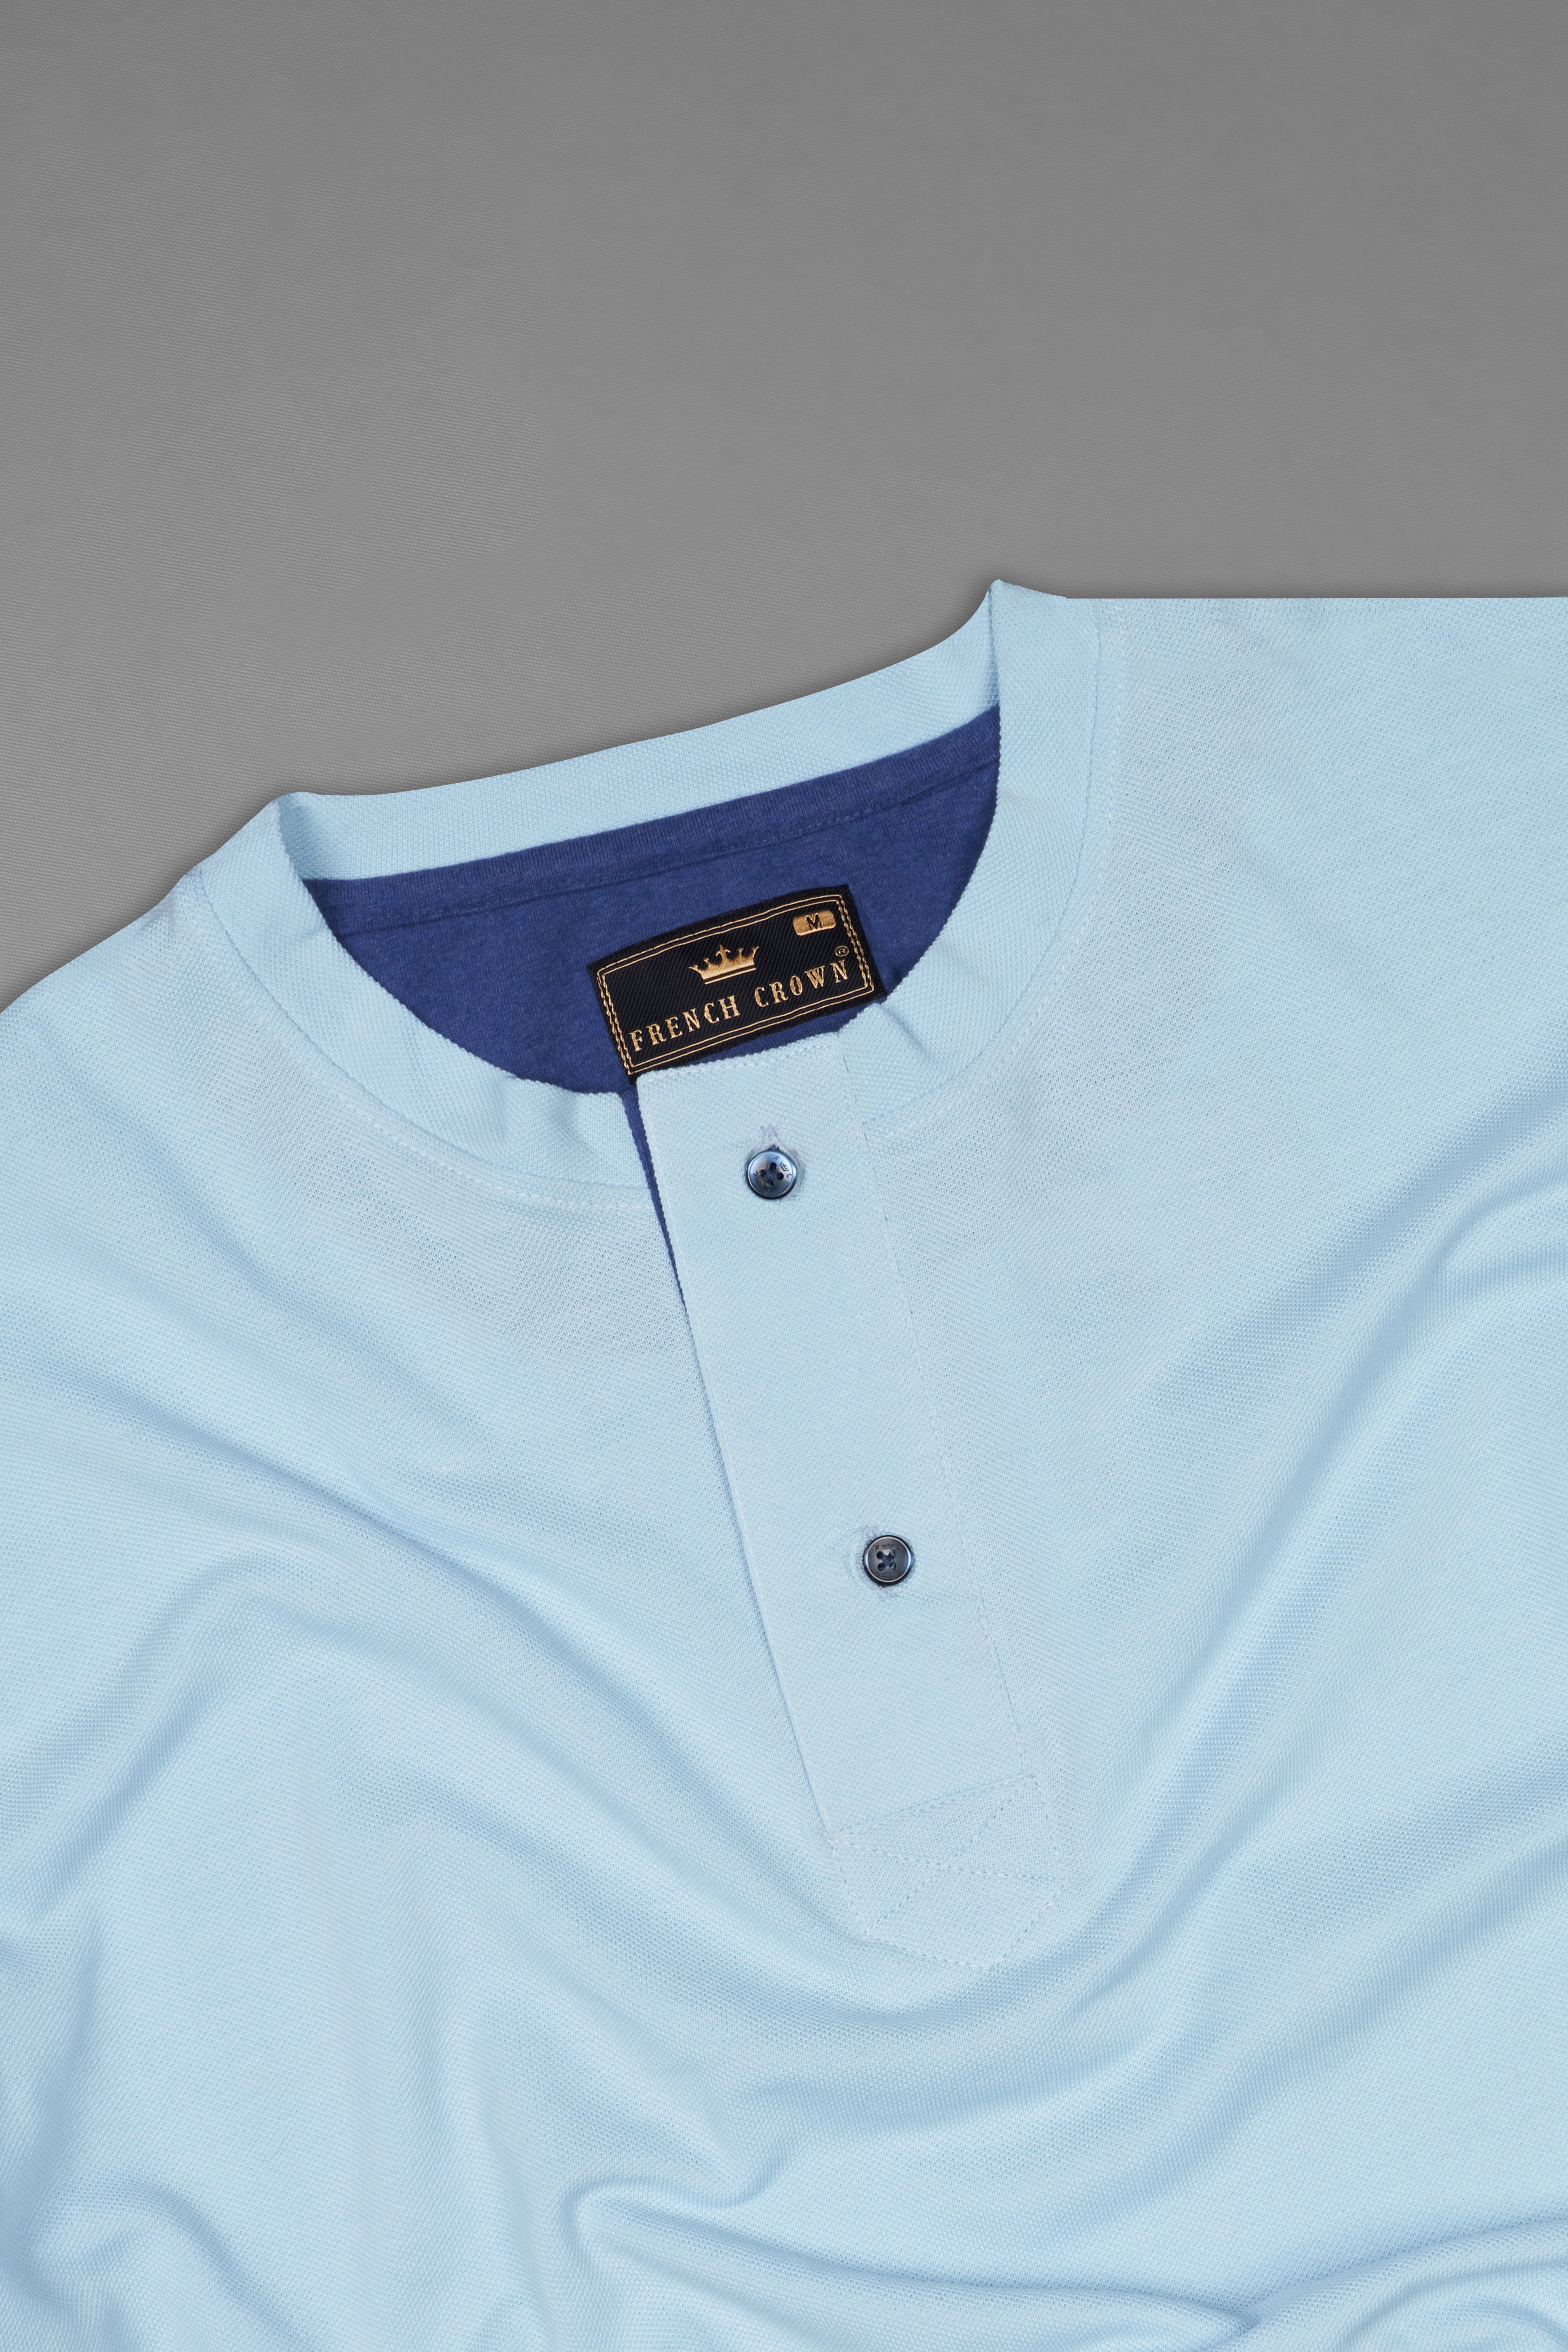 Spindle Blue Premium Cotton Round Neck Pique T-Shirt TS899-S, TS899-M, TS899-L, TS899-XL, TS899-XXL